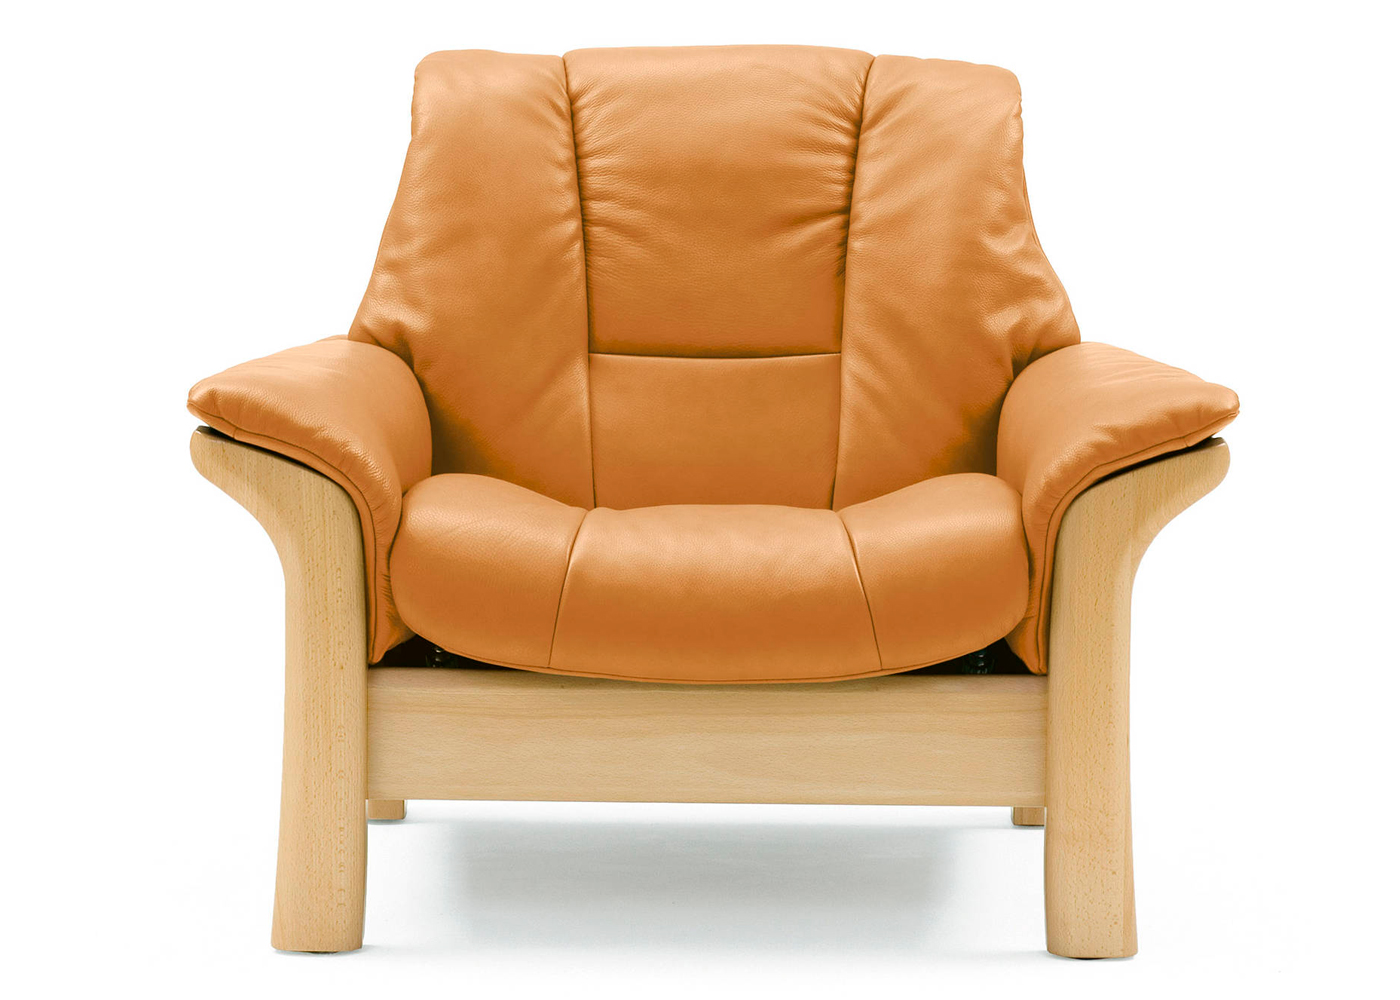 Stressless Windsor chair low back - Midfurn Furniture Superstore